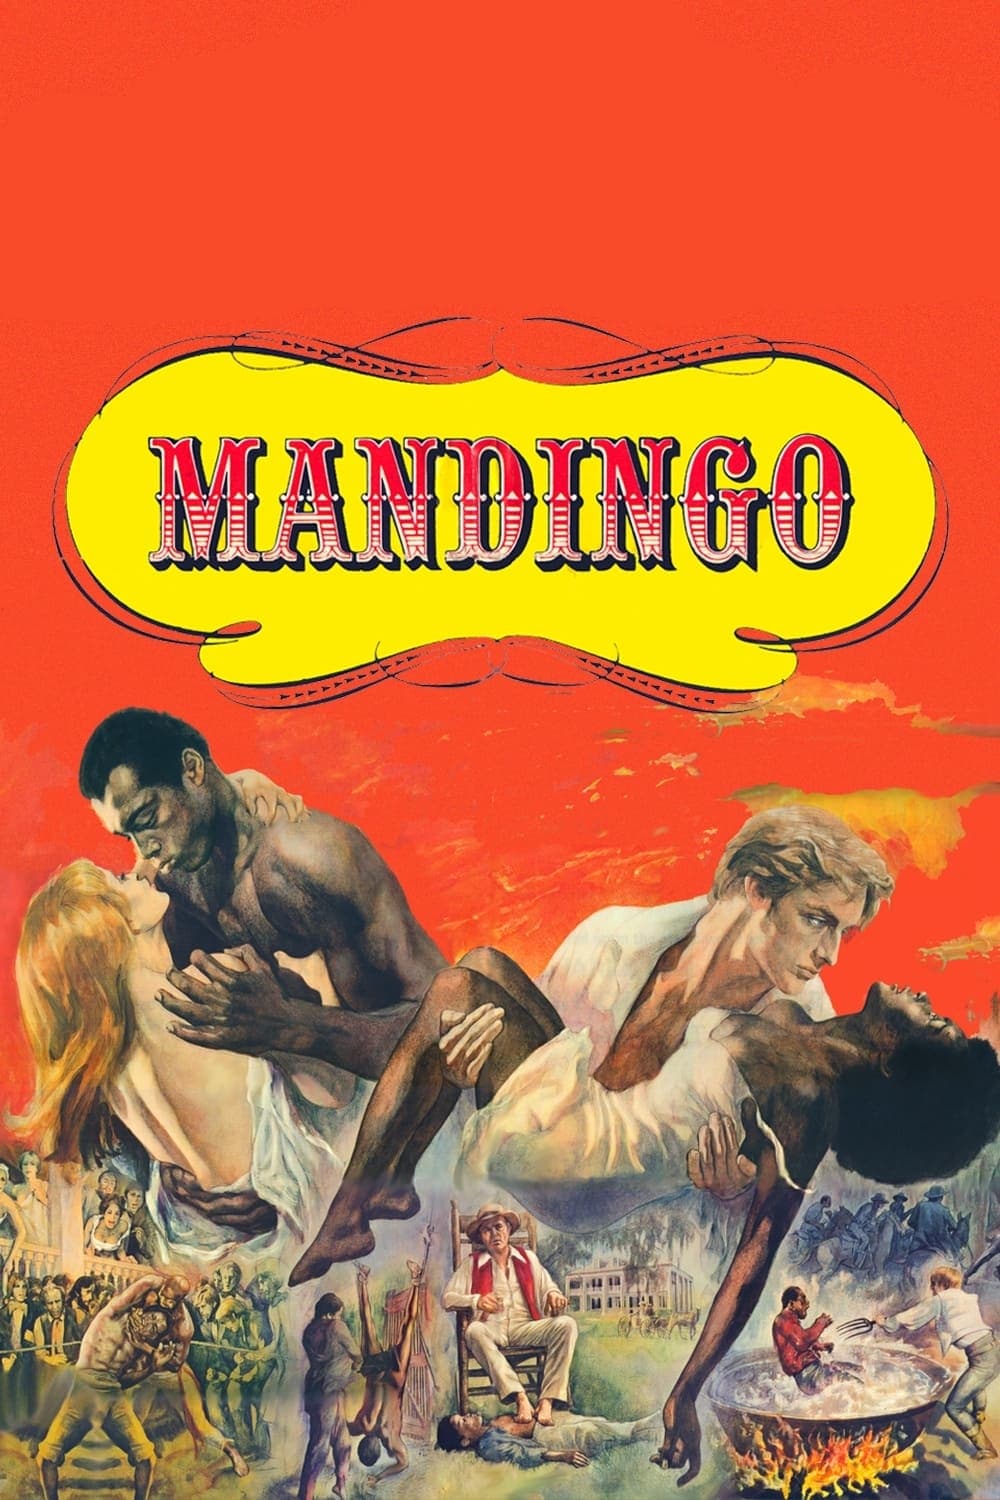 Mandingo - Mandingo (1975)